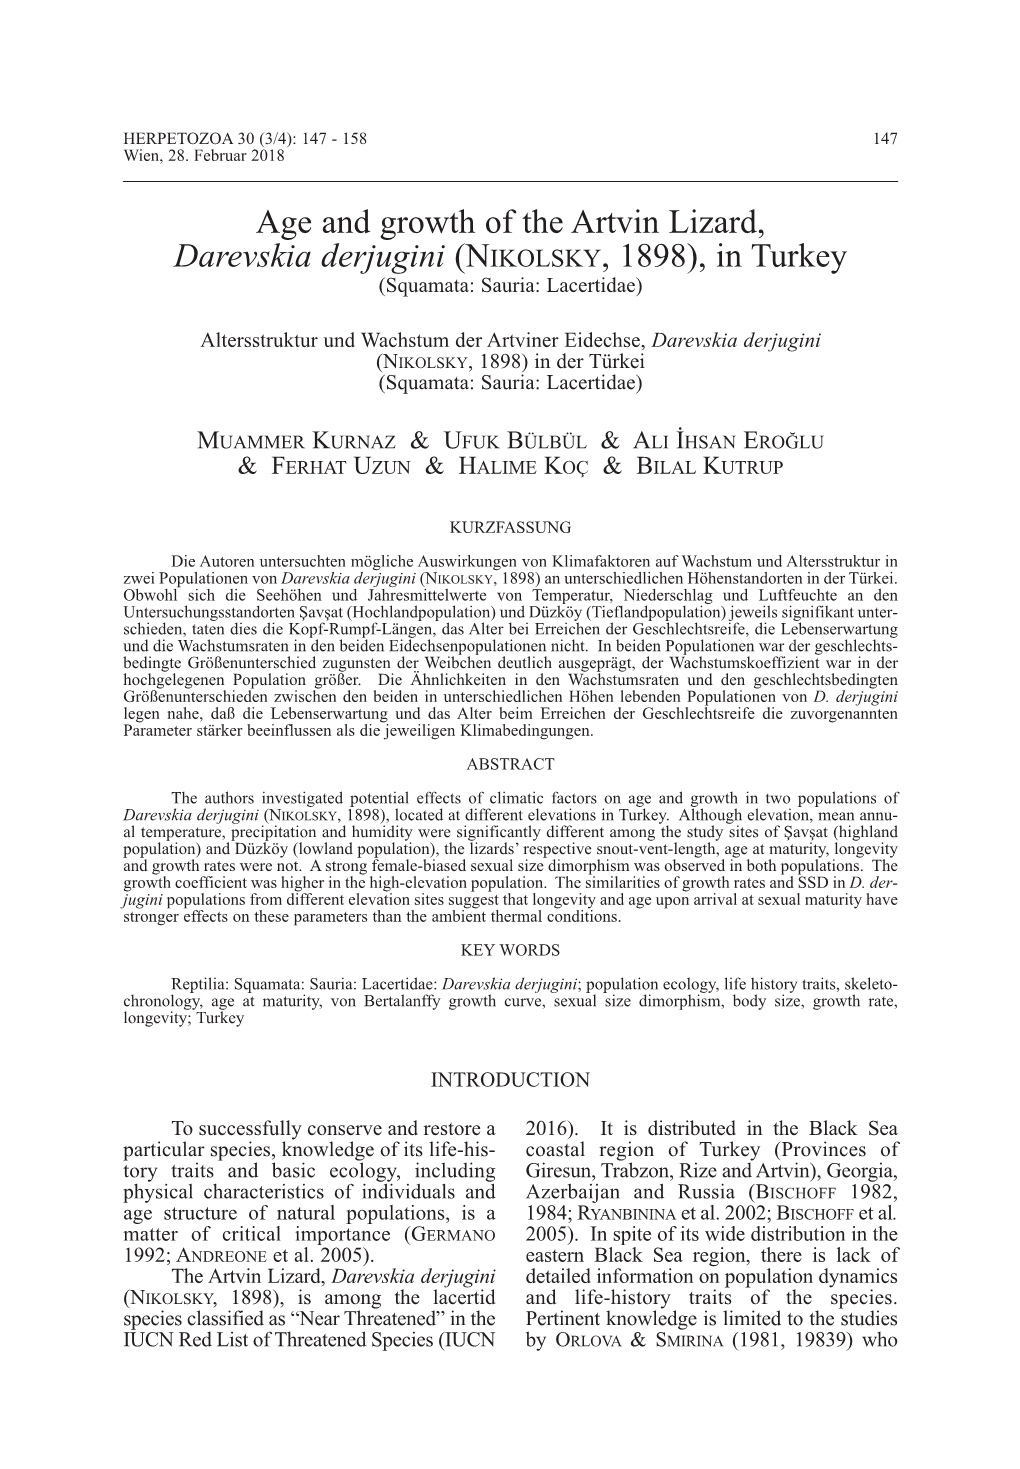 Darevskia Derjugini (NIKOLSKY, 1898), in Turkey (Squamata: Sauria: Lacertidae)